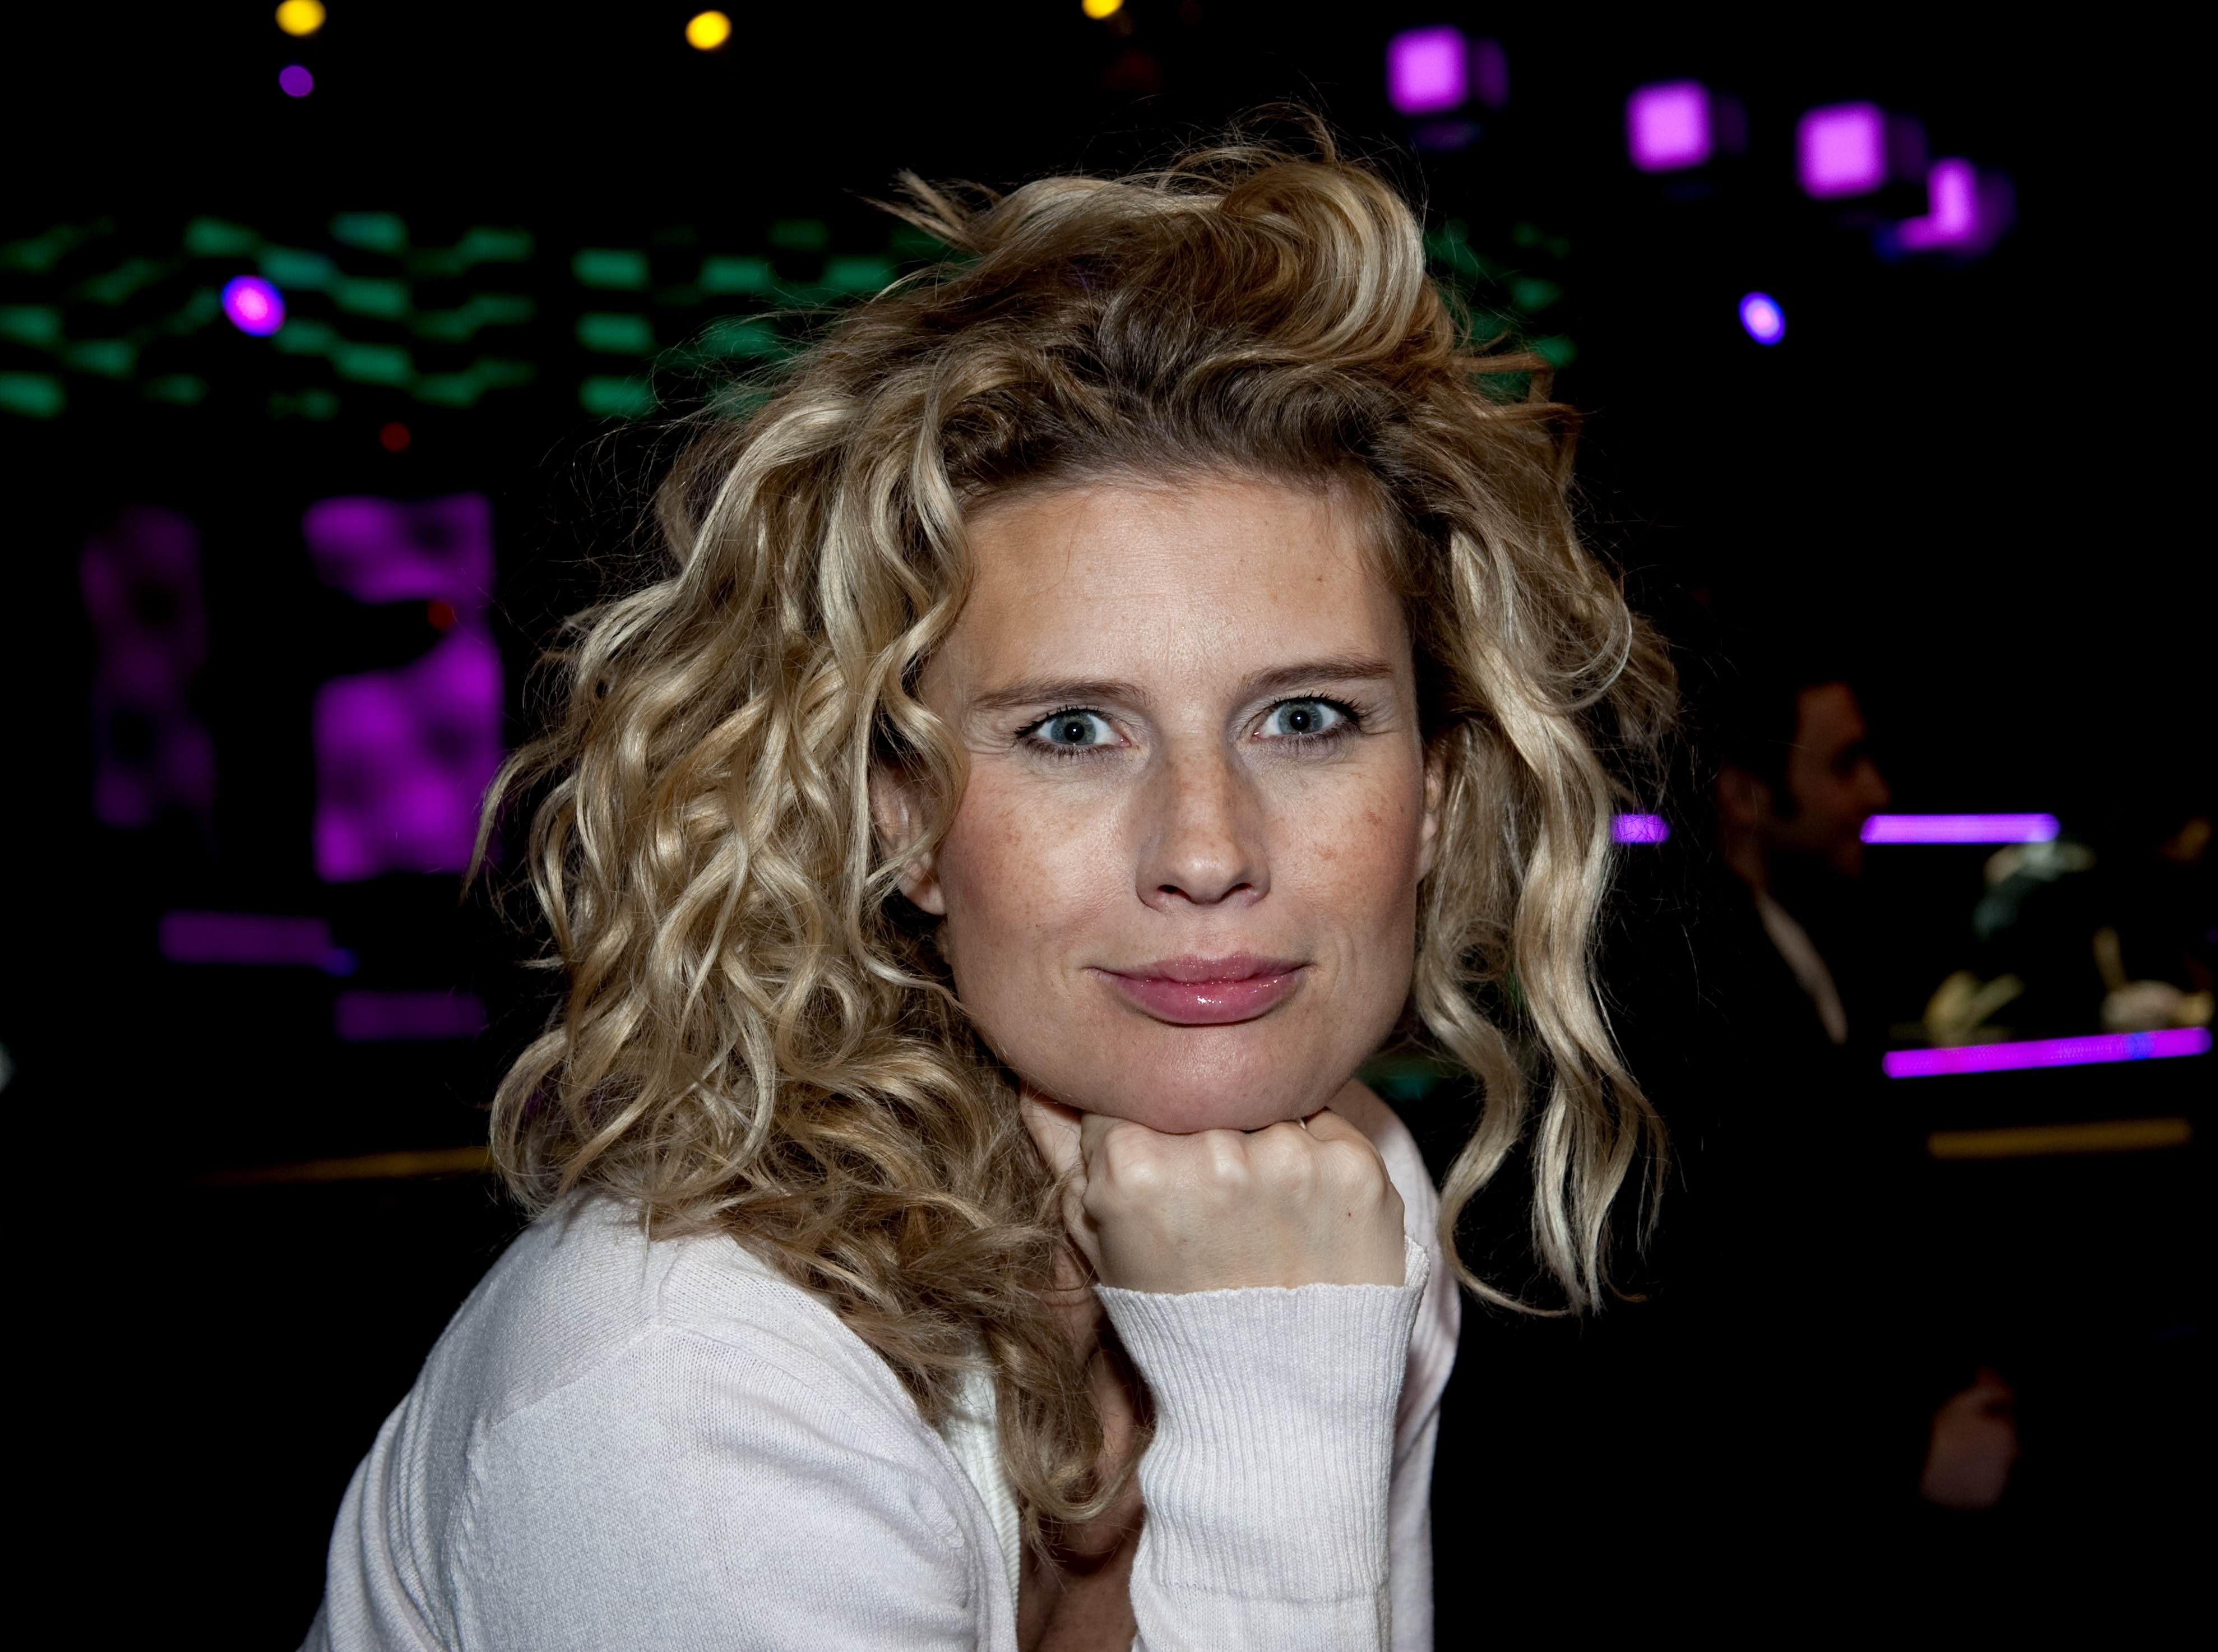 Eurovision Song Contest 2010, Christine Meltzer, Anna Bergendahl, Melodifestivalen 2010